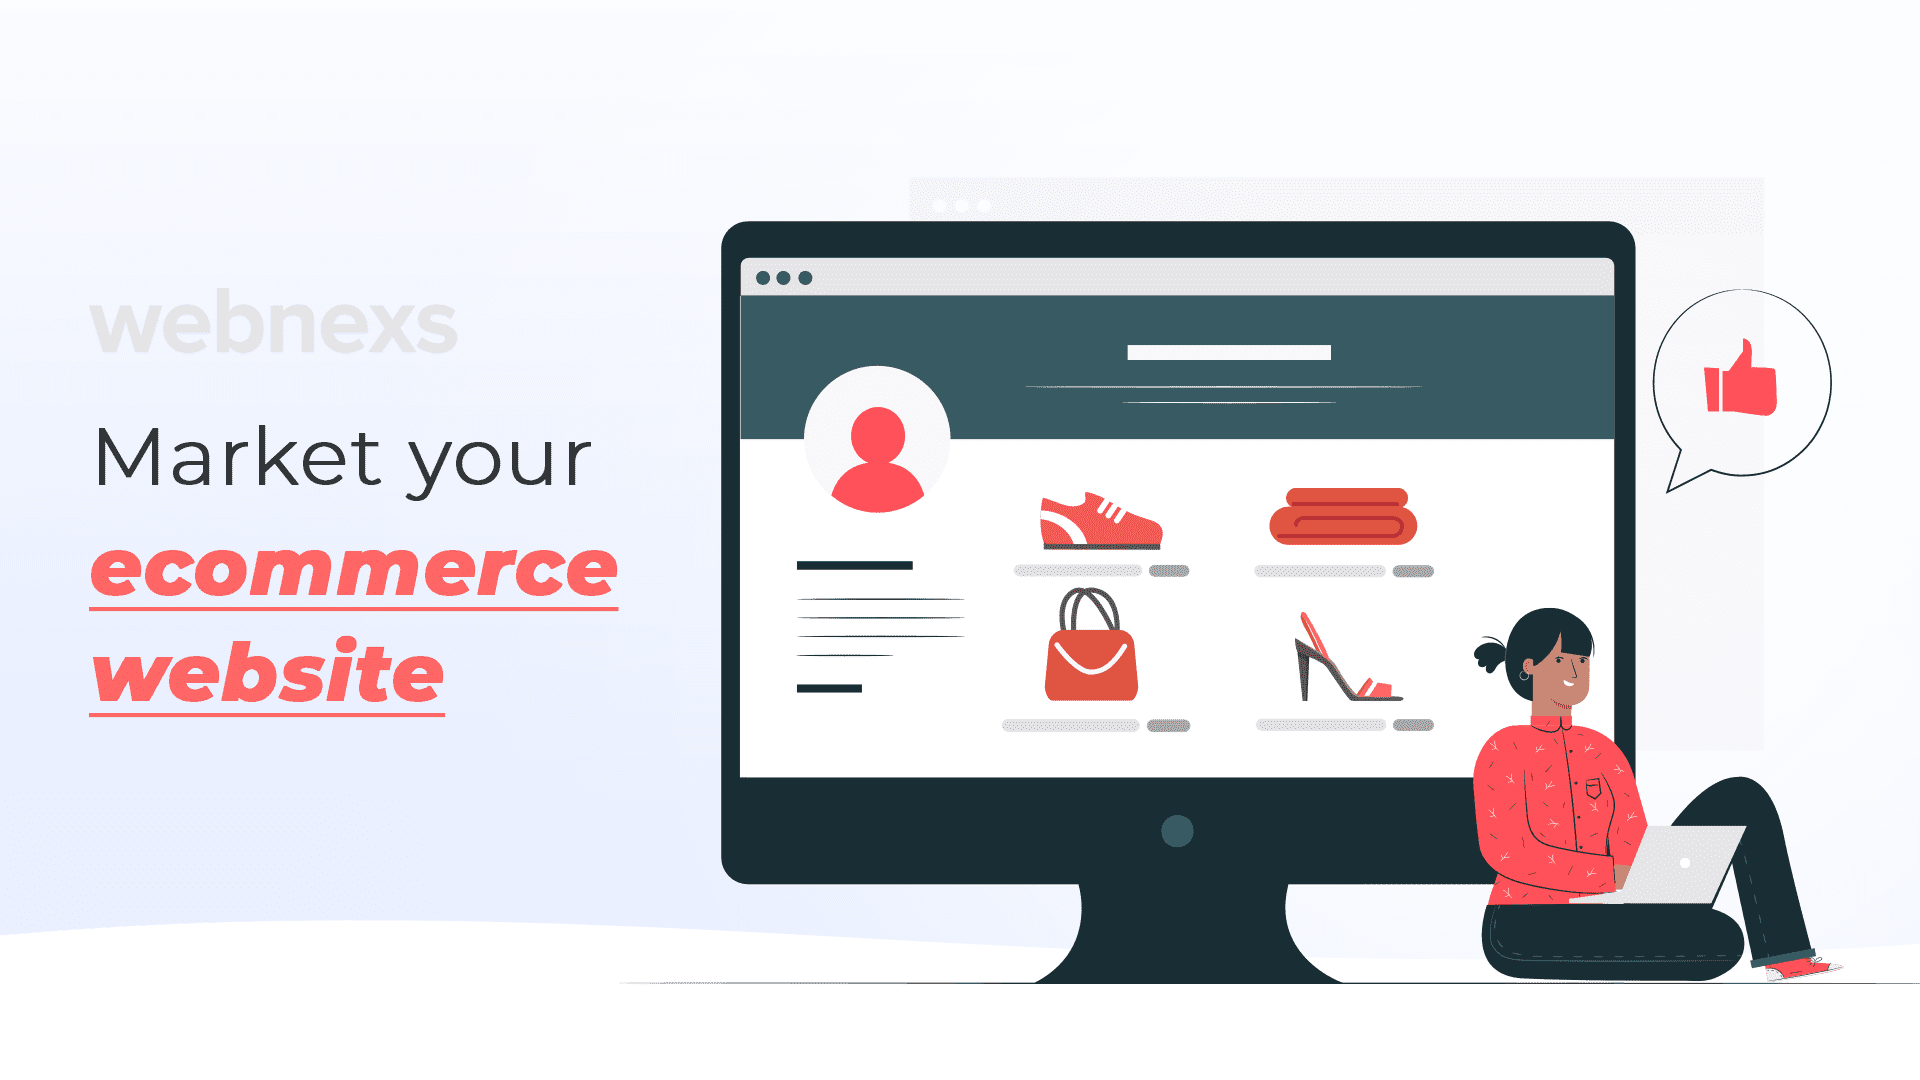 Step 08: Market your ecommerce website